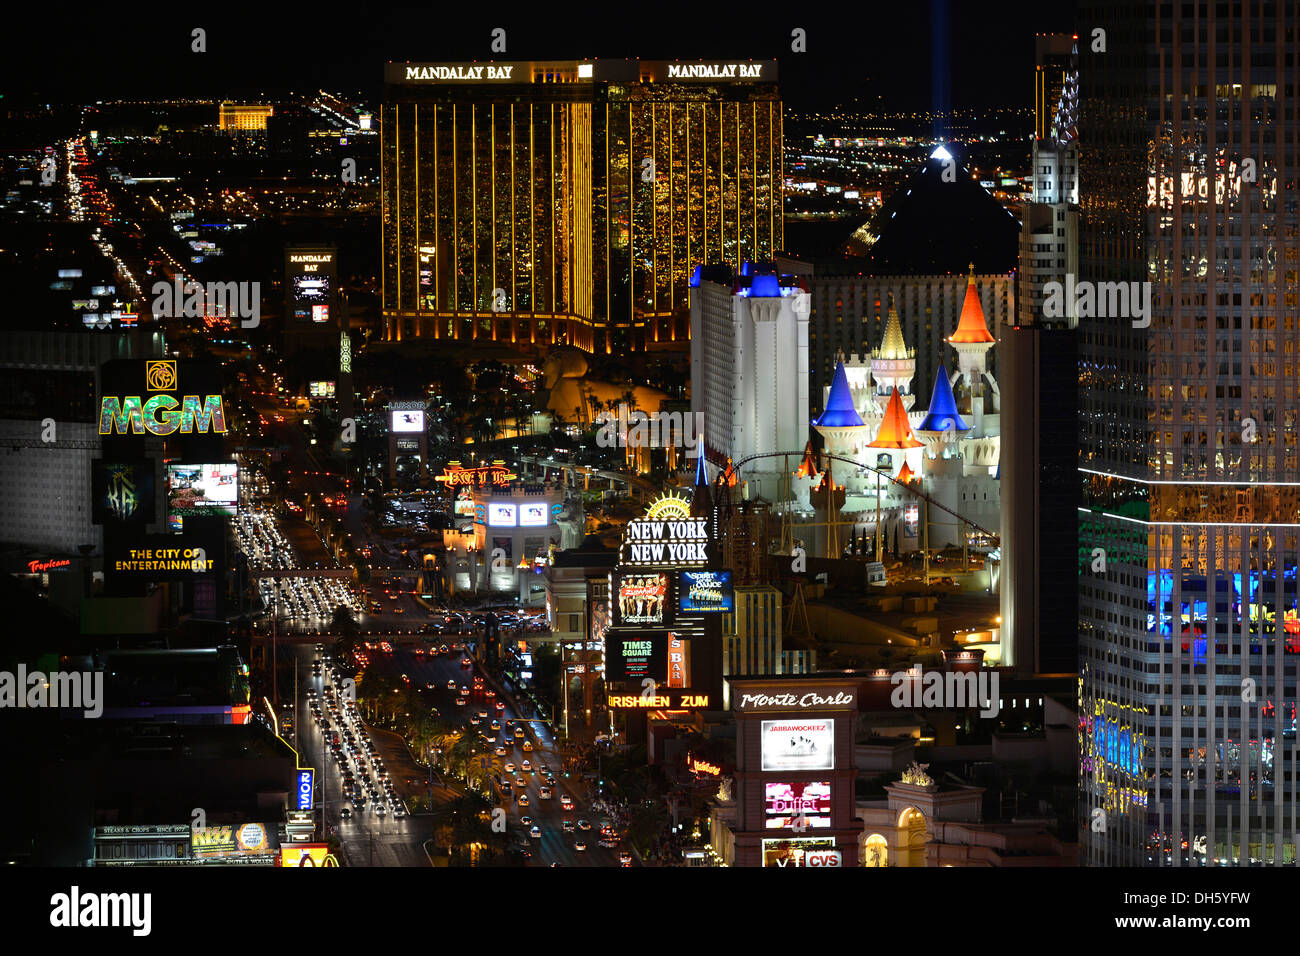 Night scene, The Strip, The Cosmopolitan luxury hotel, New York New York, Mandalay Bay, Excalibur, Las Vegas, Nevada Stock Photo